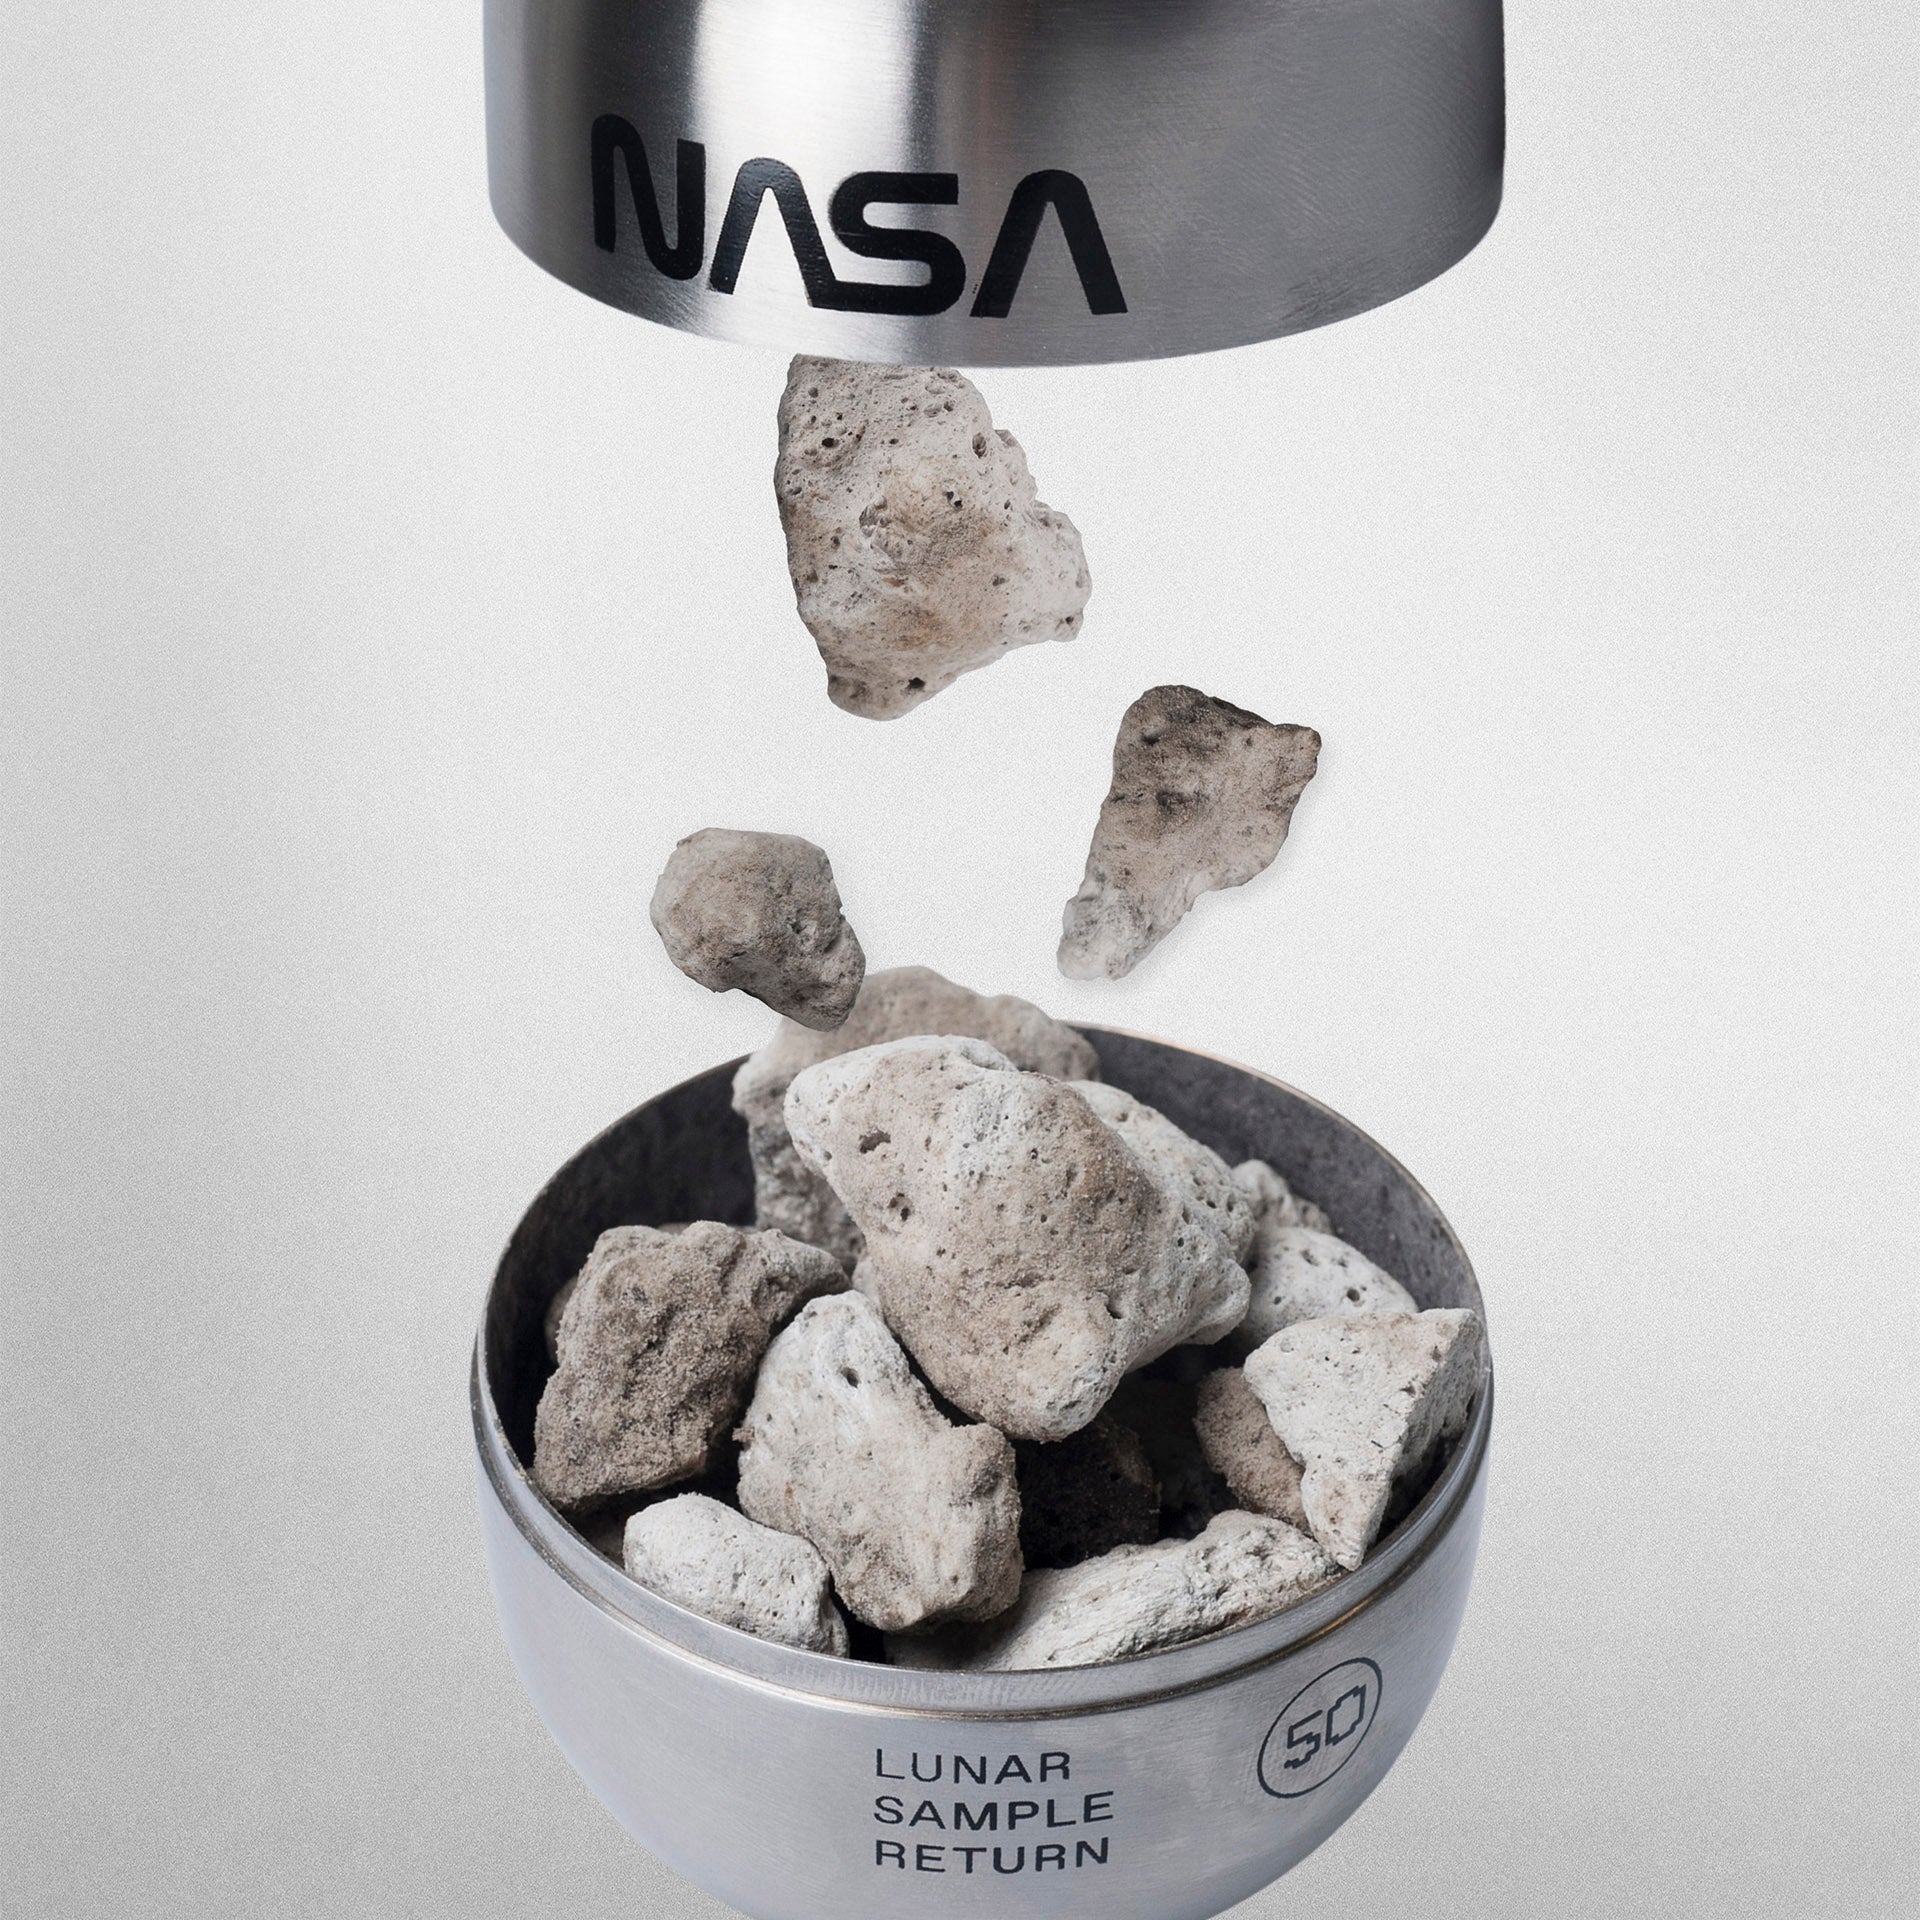 NASA approved - ANICORN "Lunar Sample Return" The Moon Smell